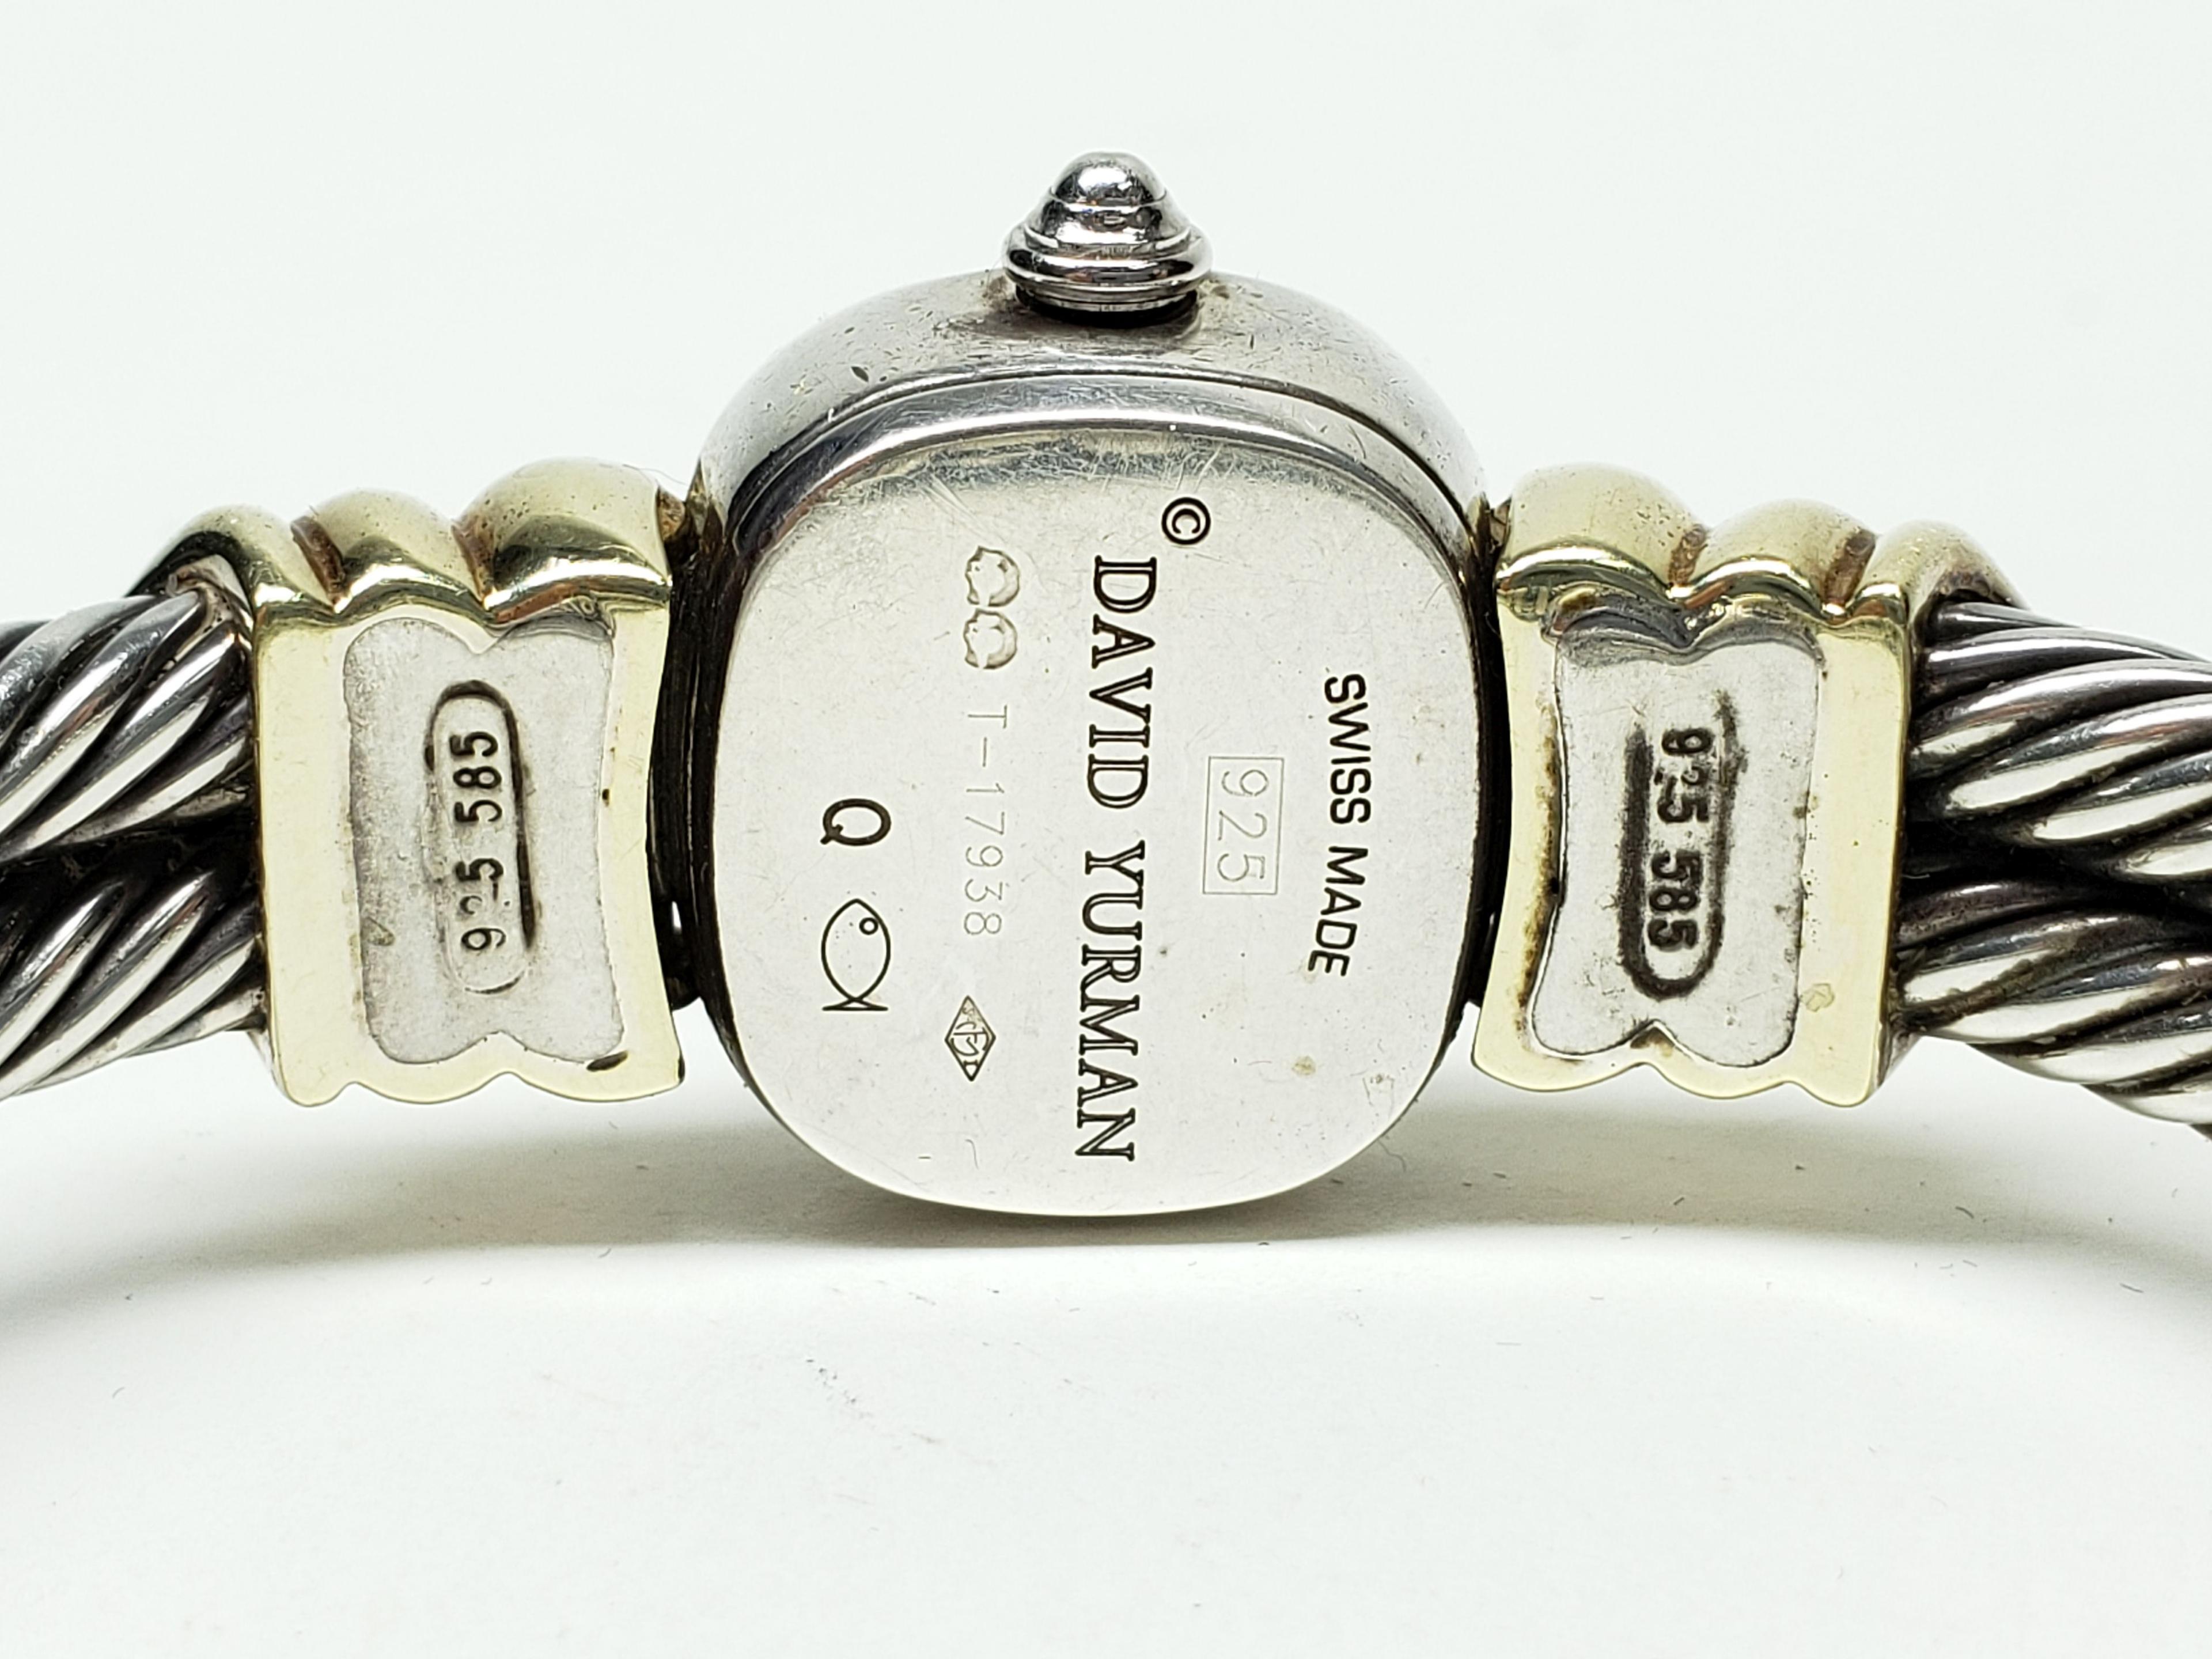 Designer Authentic Womens David Yurman 14k Yellow Gold & Silver 925 Watch